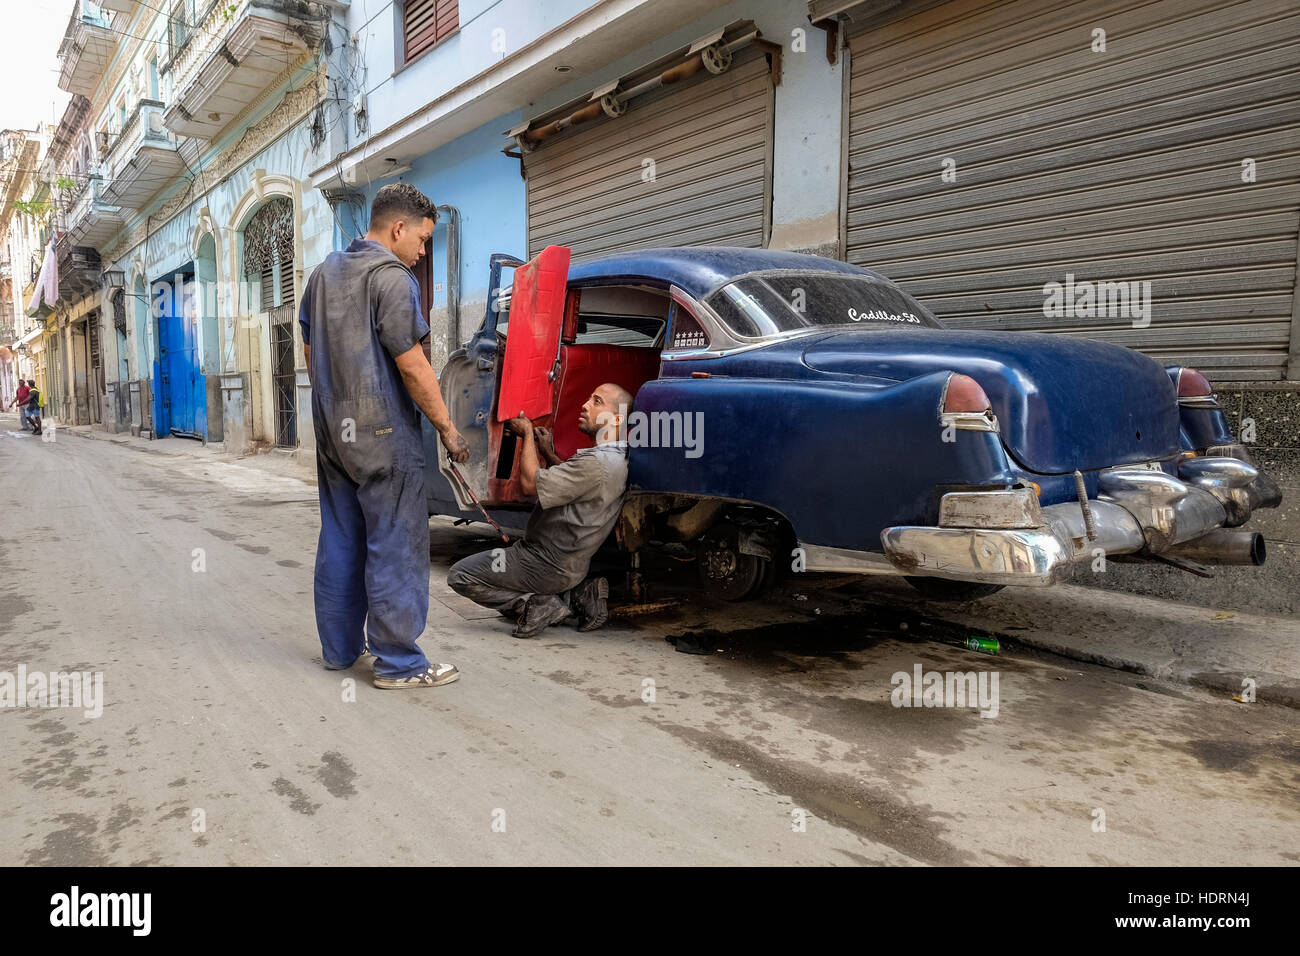 Car repairs on the street in La Havana, Cuba. Stock Photo